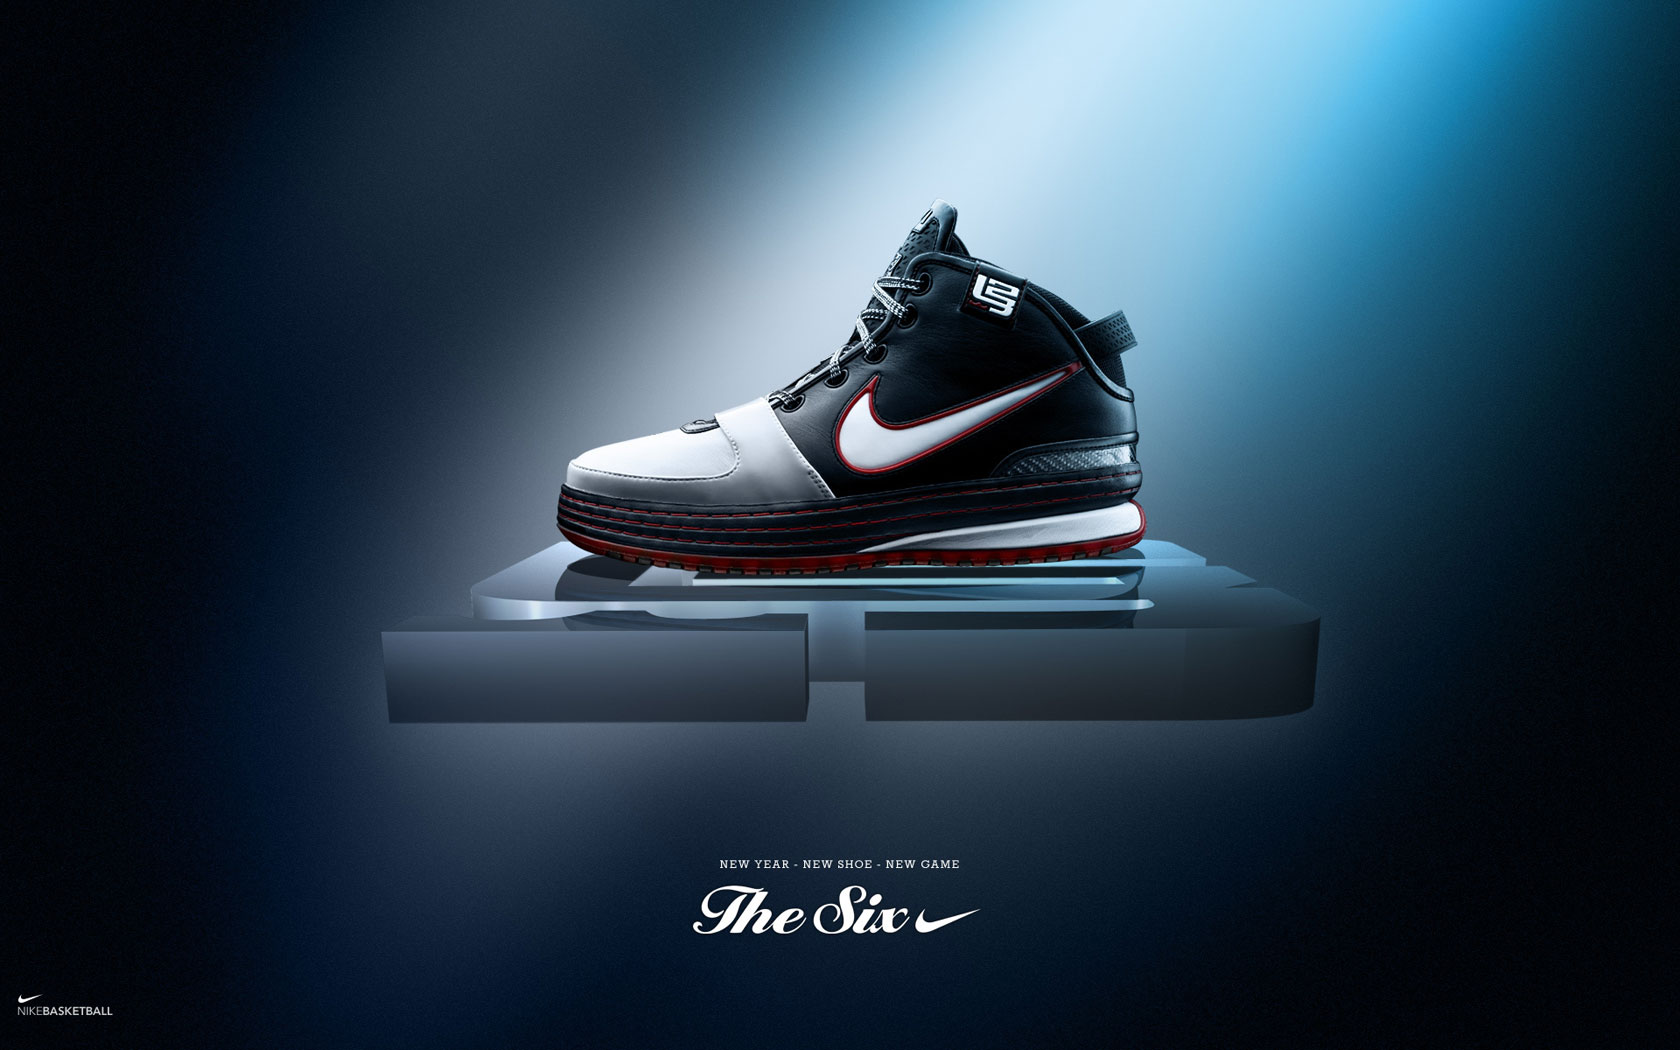 The Nike Shoes HD Lock Screen Wallpaper Source